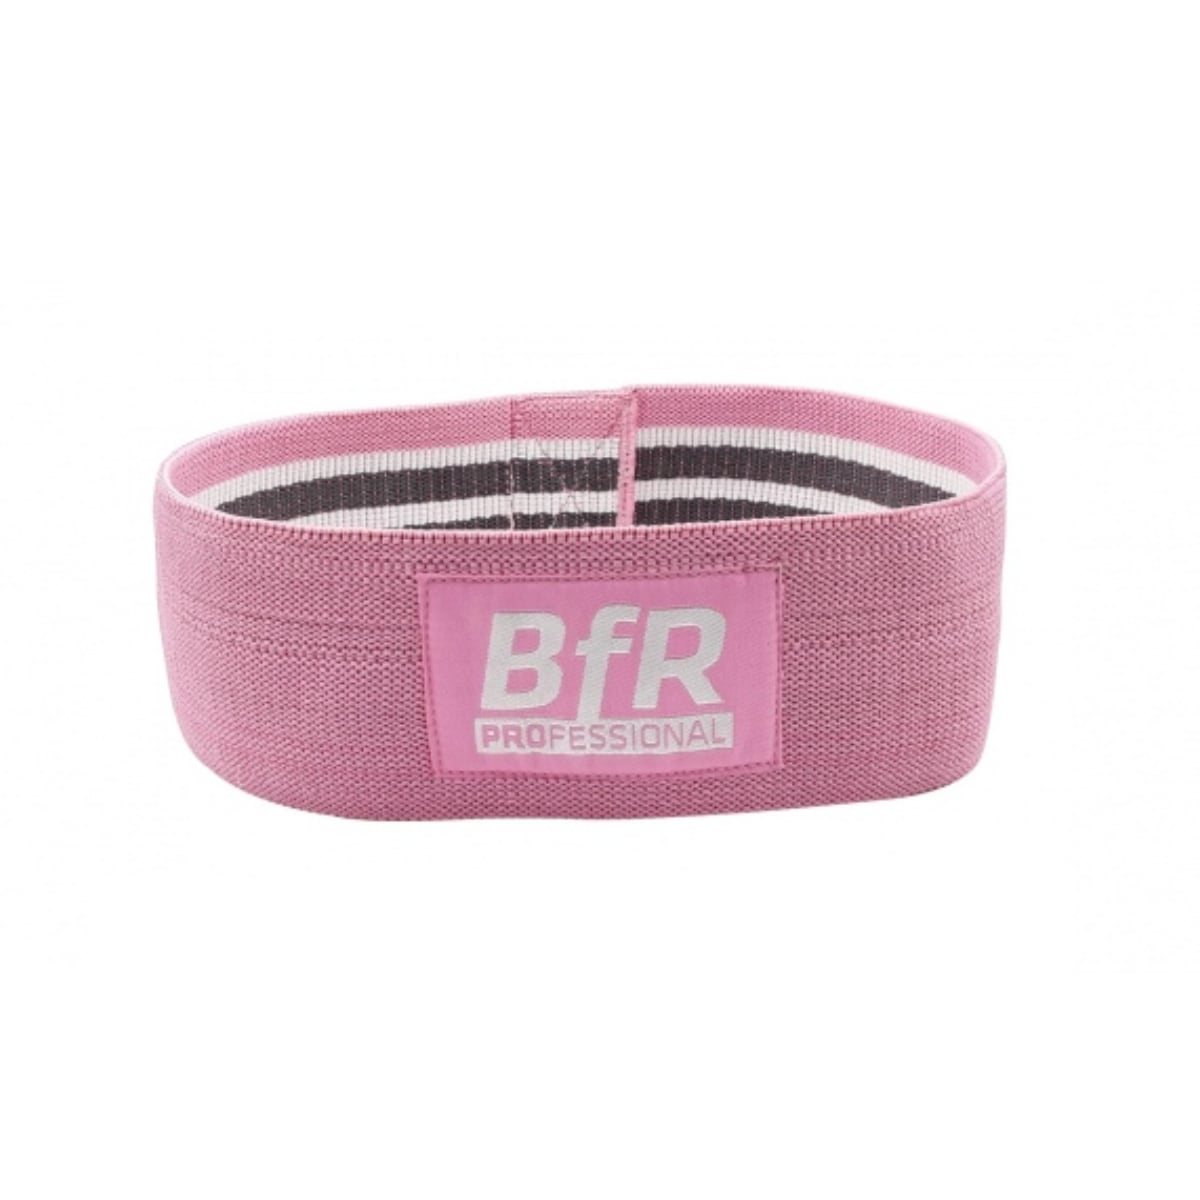 BfR Pro GluteBuilder Pink - Limited edition